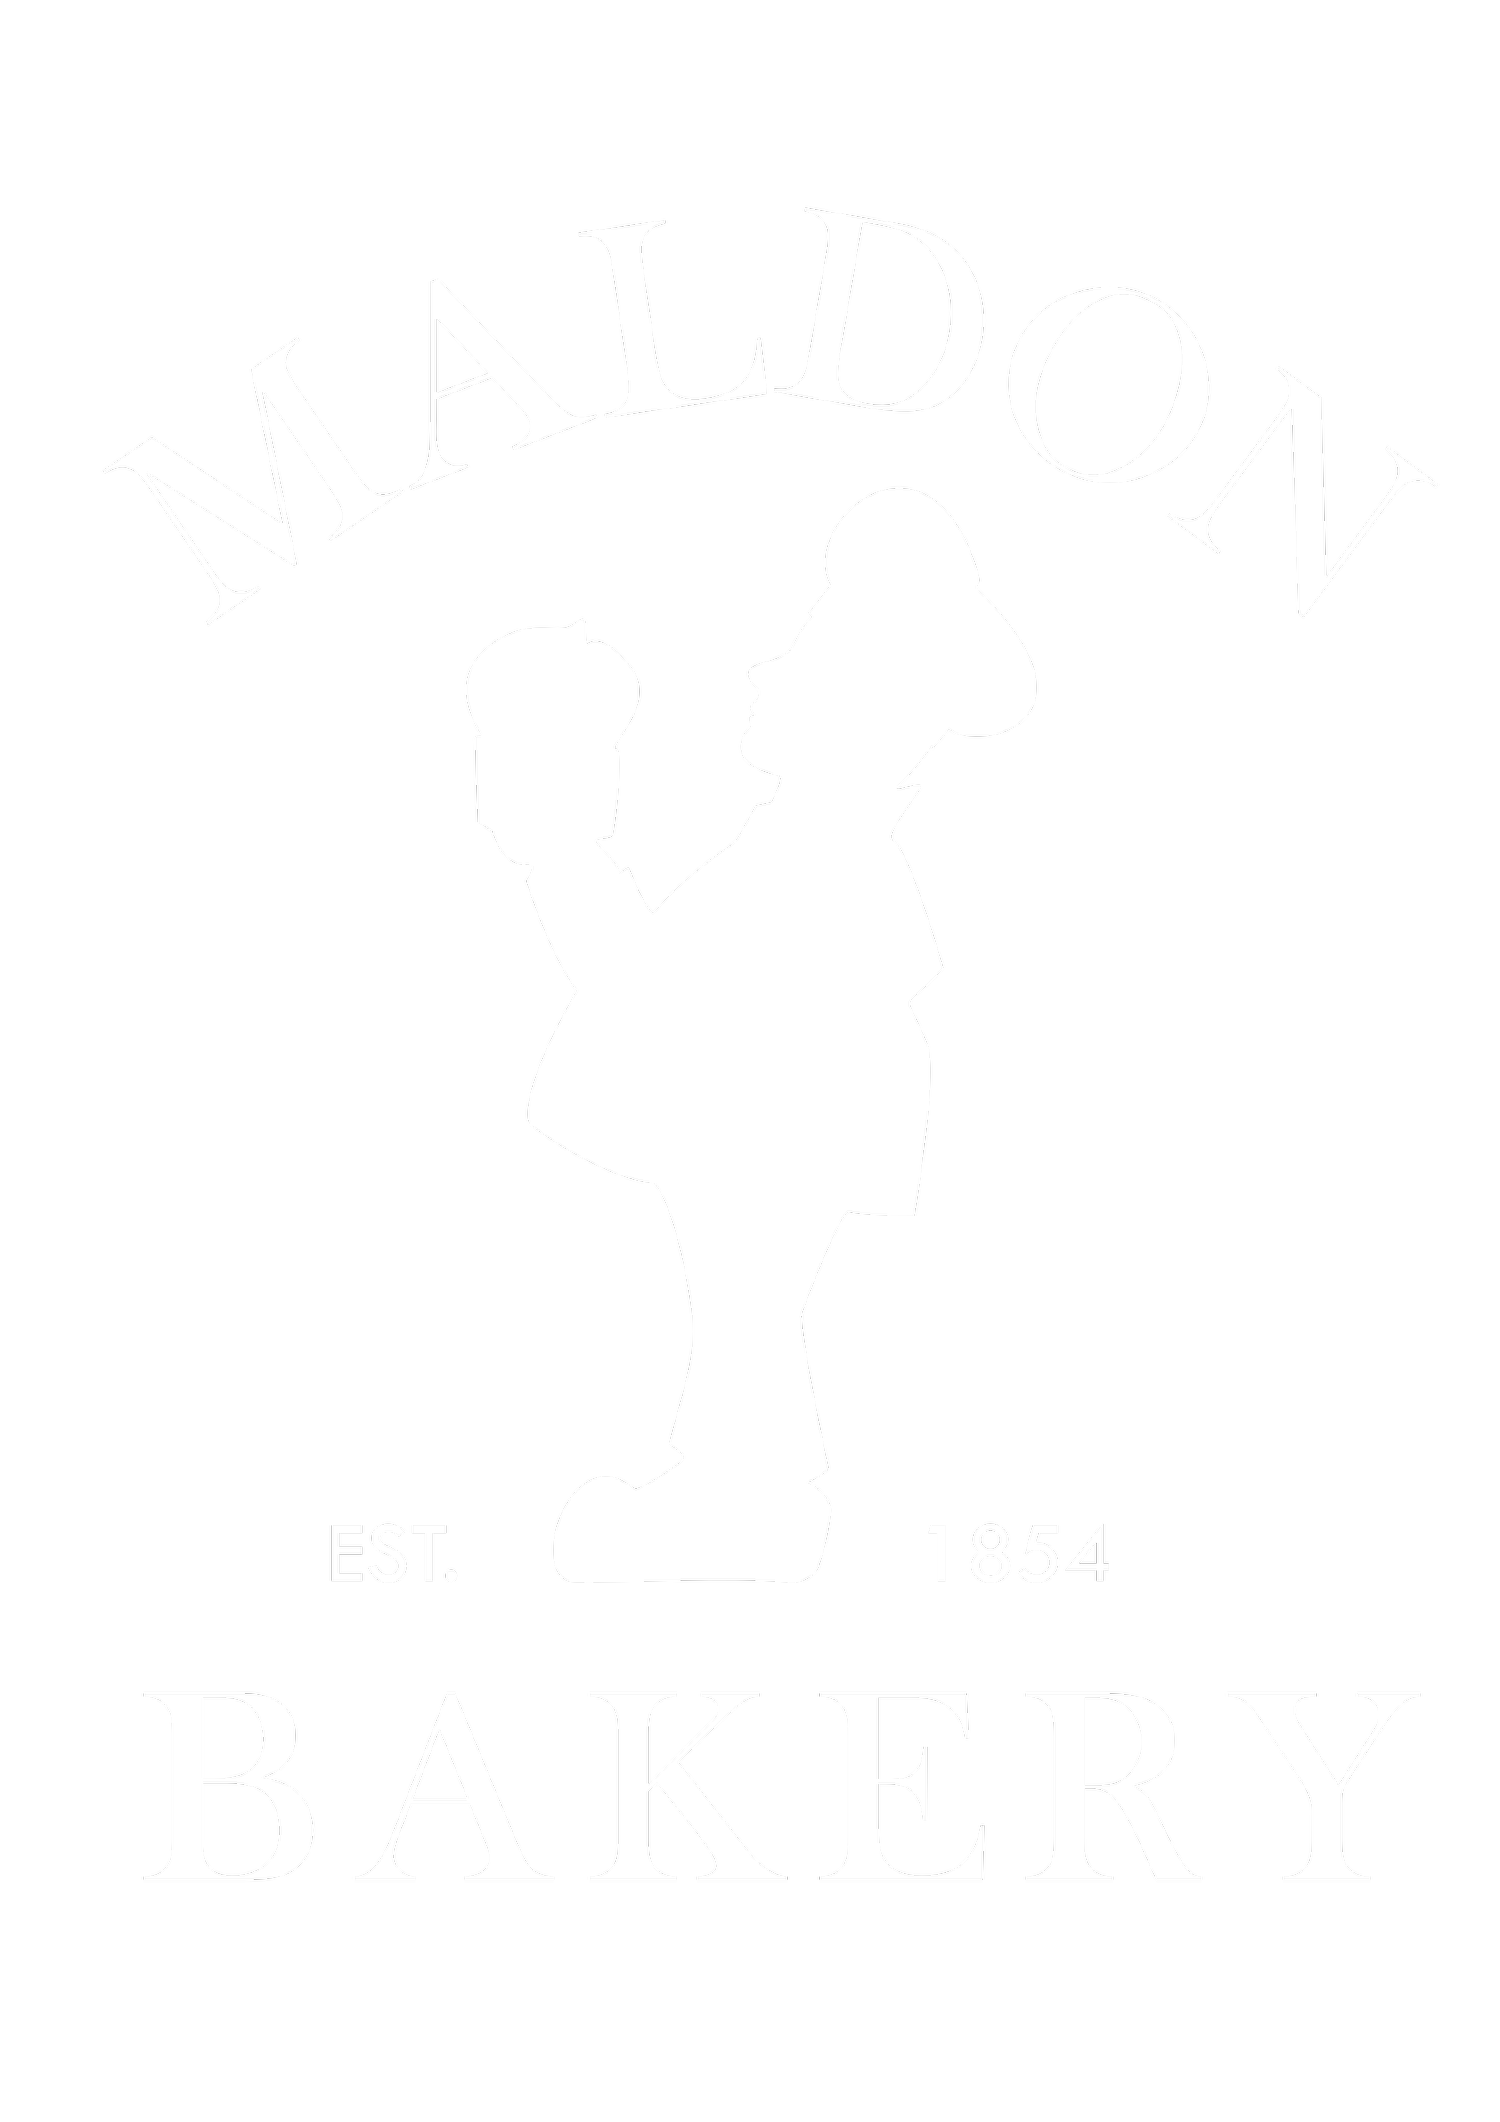 The Maldon Bakery